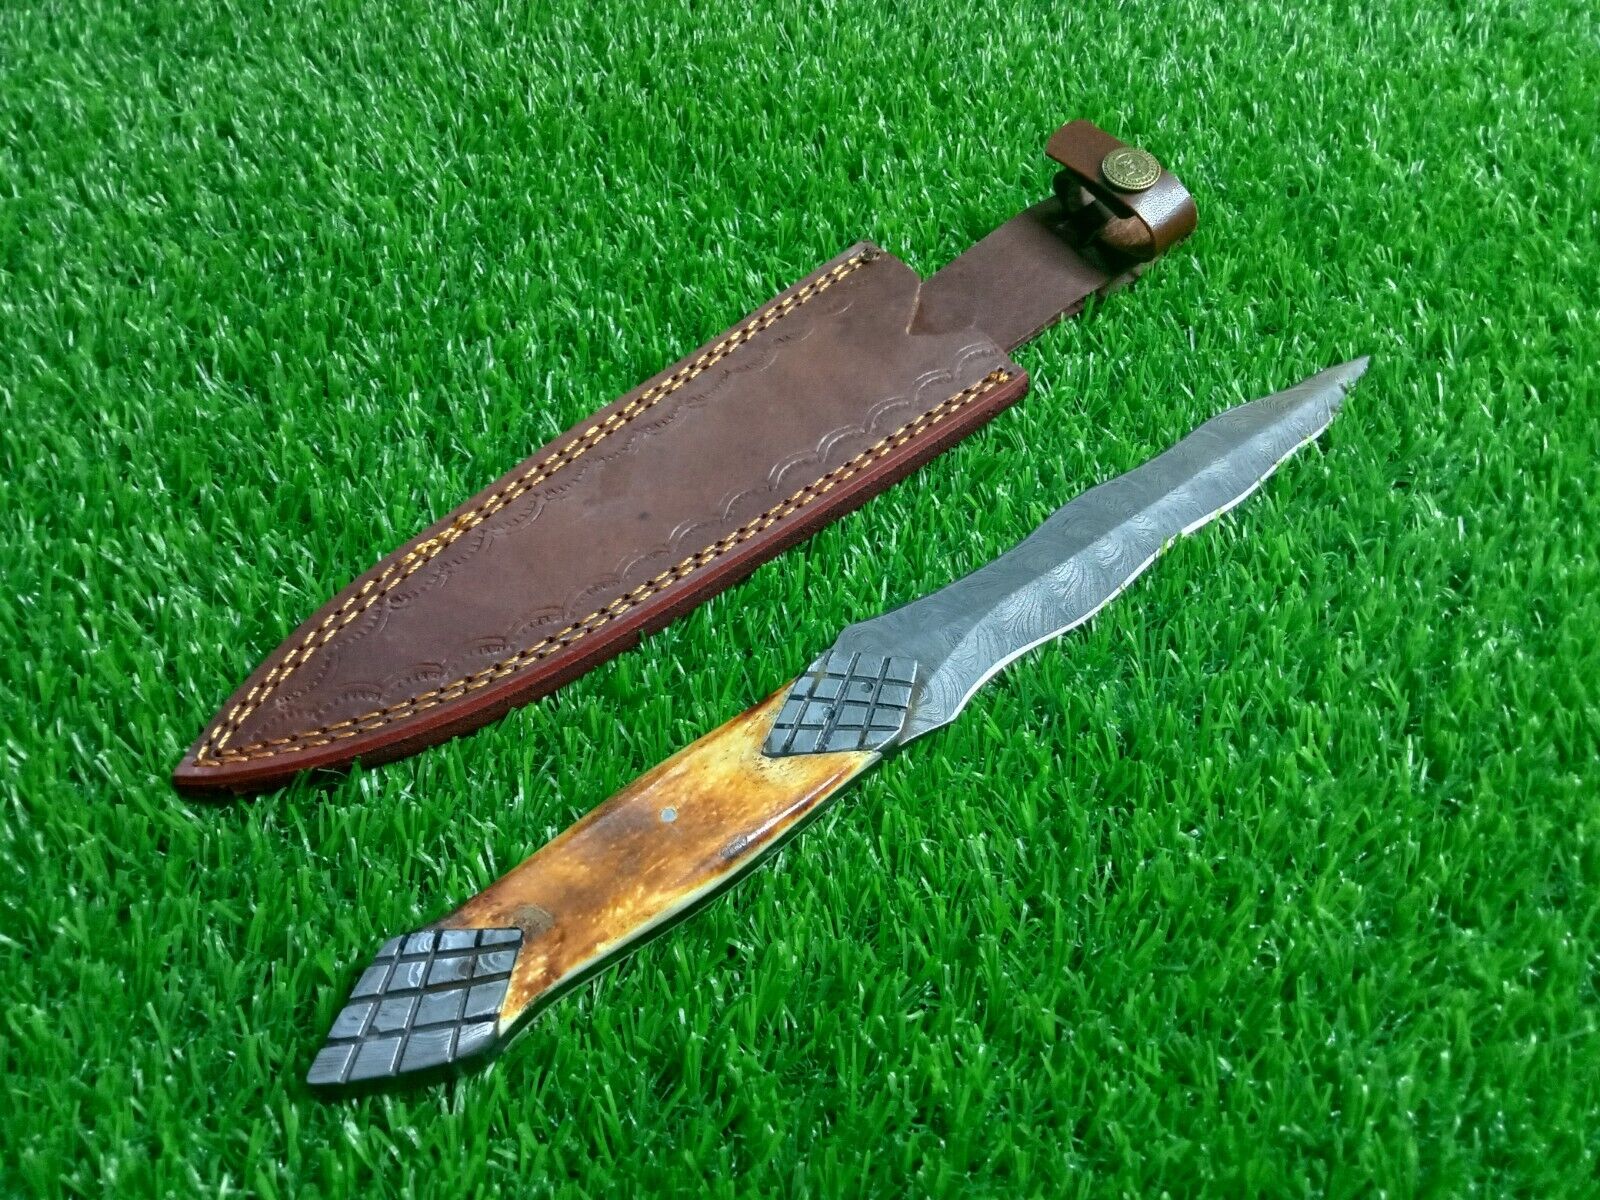 Custom Knife King's Made Beautiful Damascus Steel Kris Blade Knife + color bone